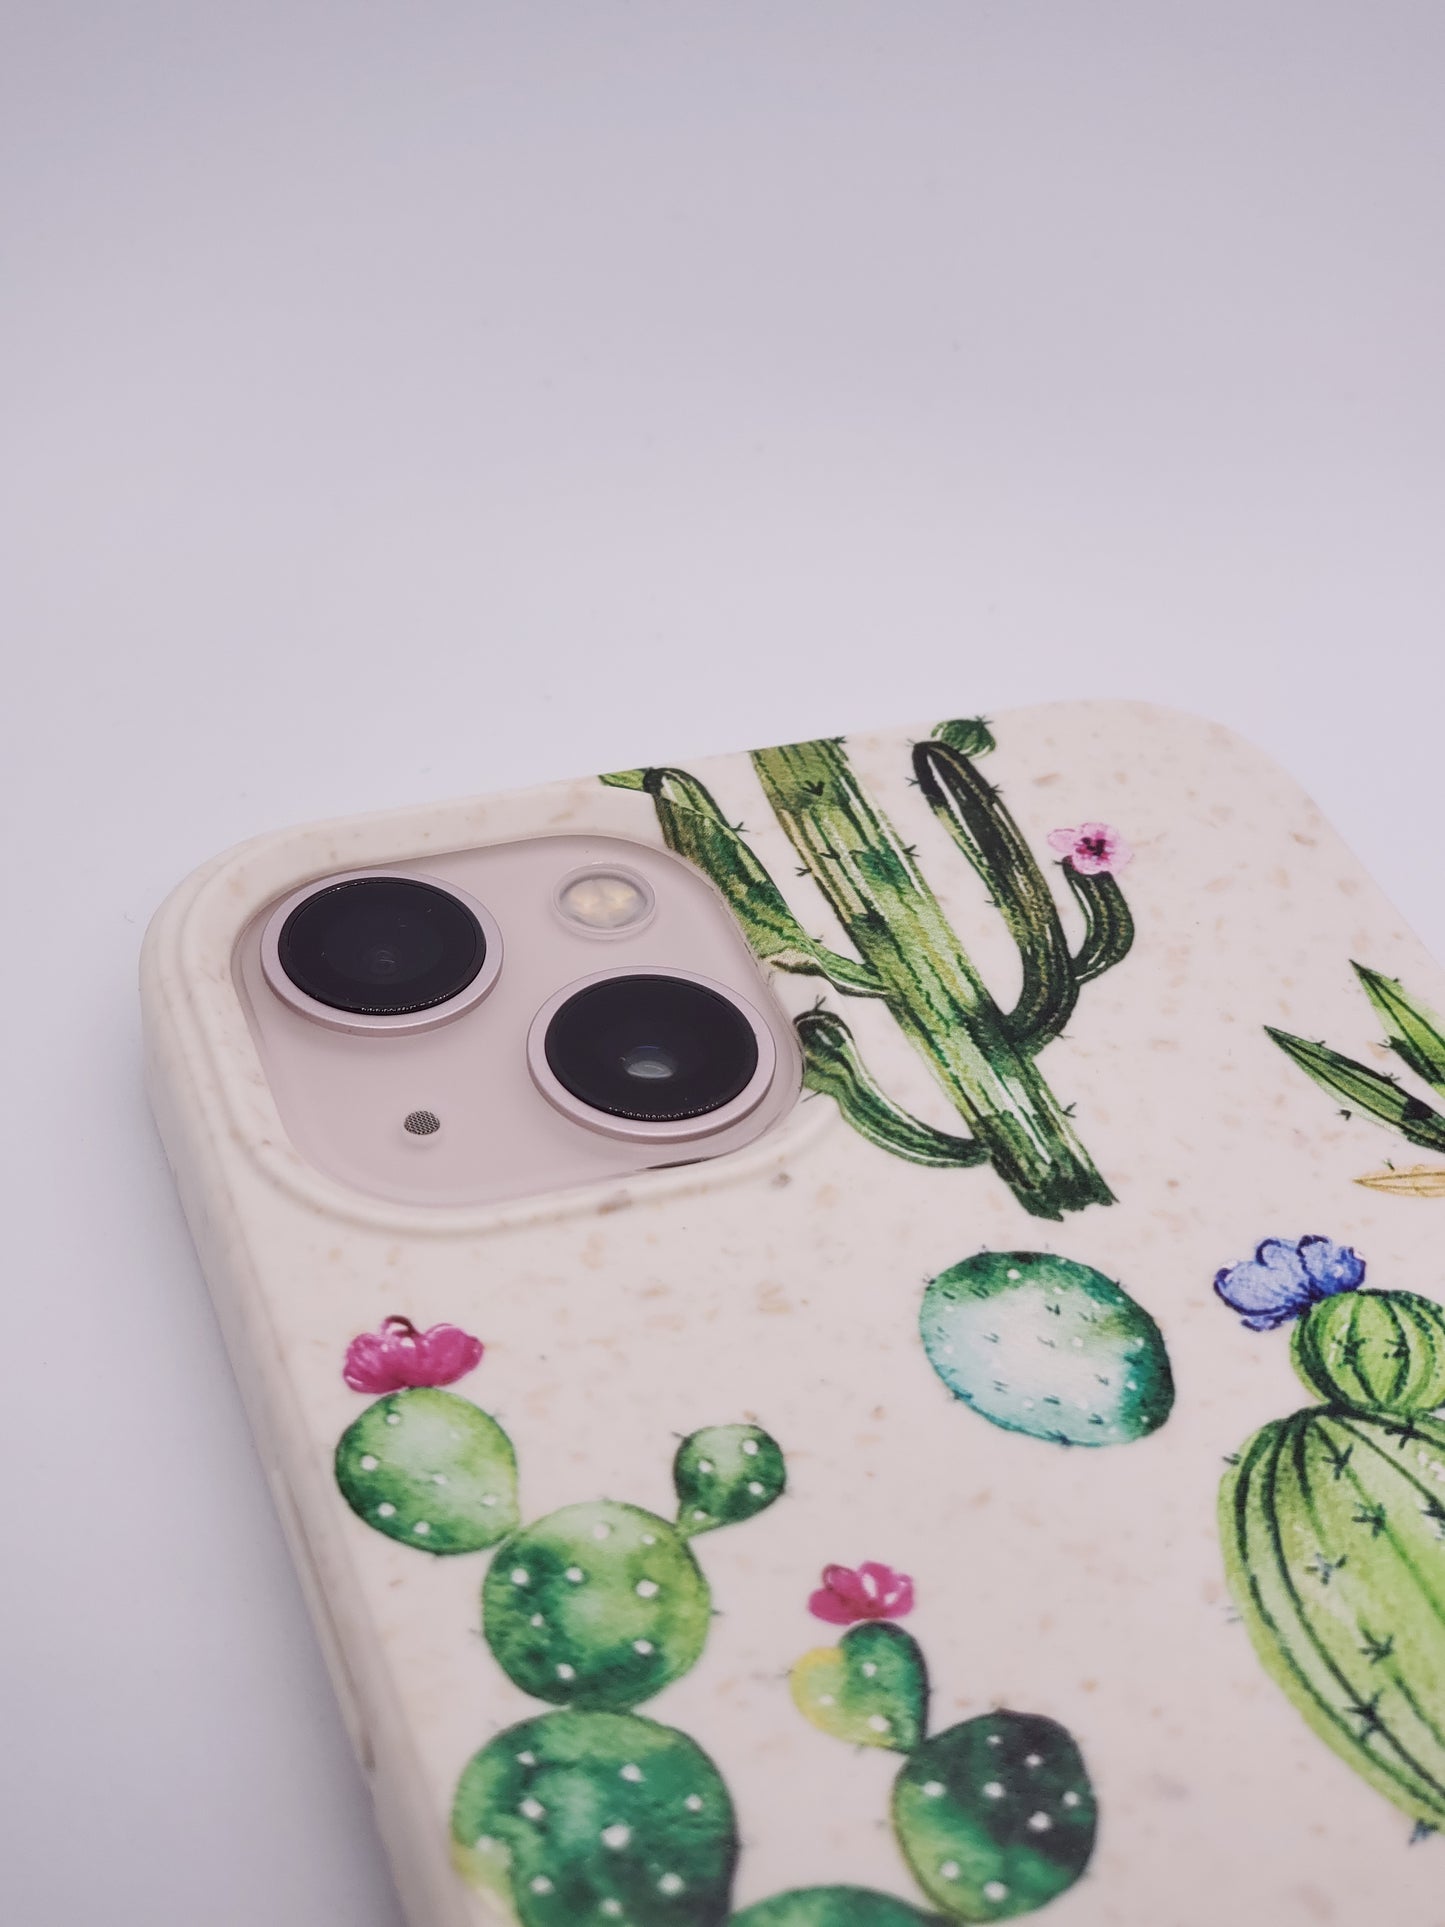 Coque iPhone biodégradable fleurs de cactus